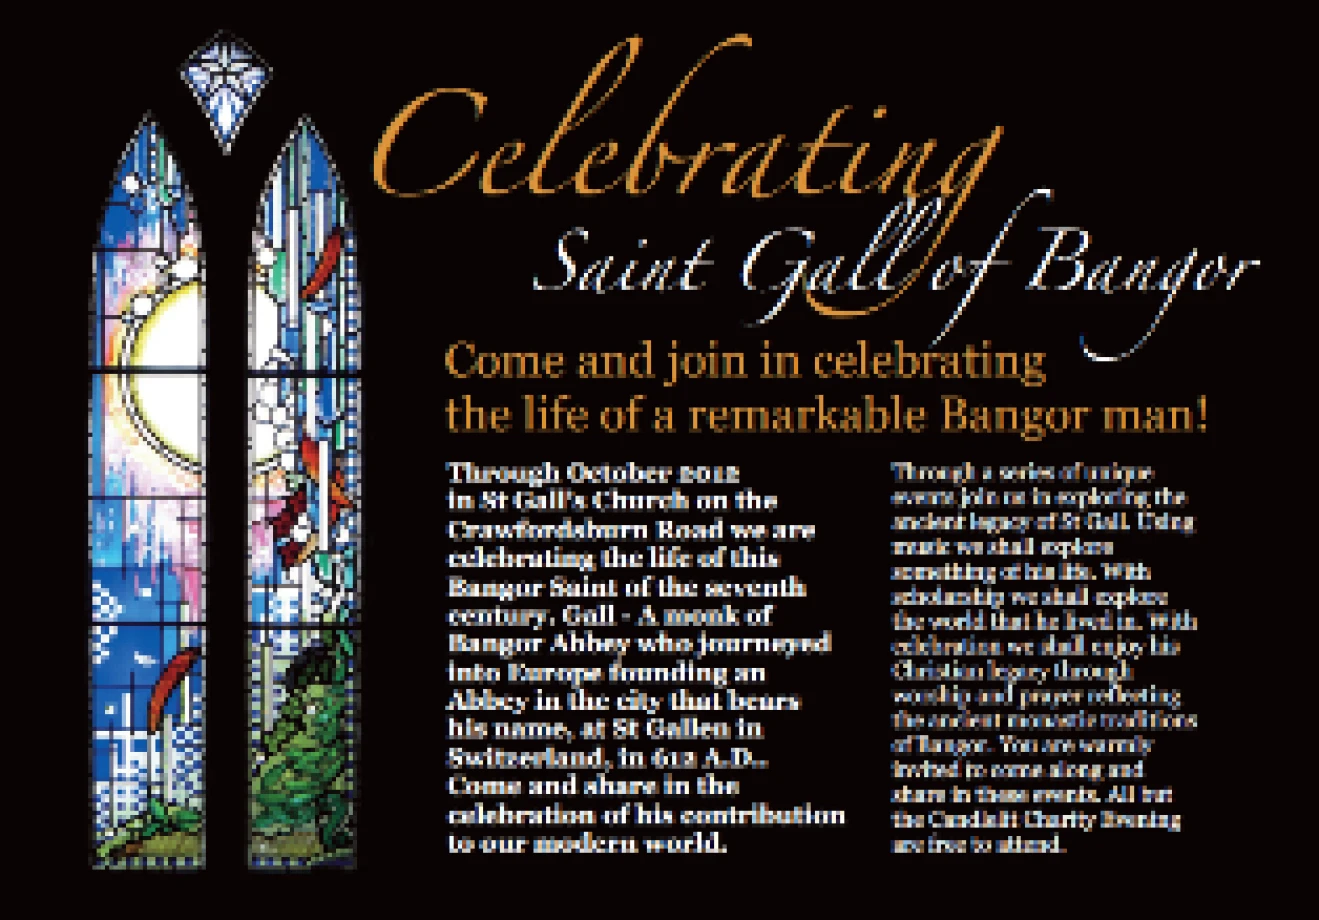 Parish celebrates Saint Gall of Bangor